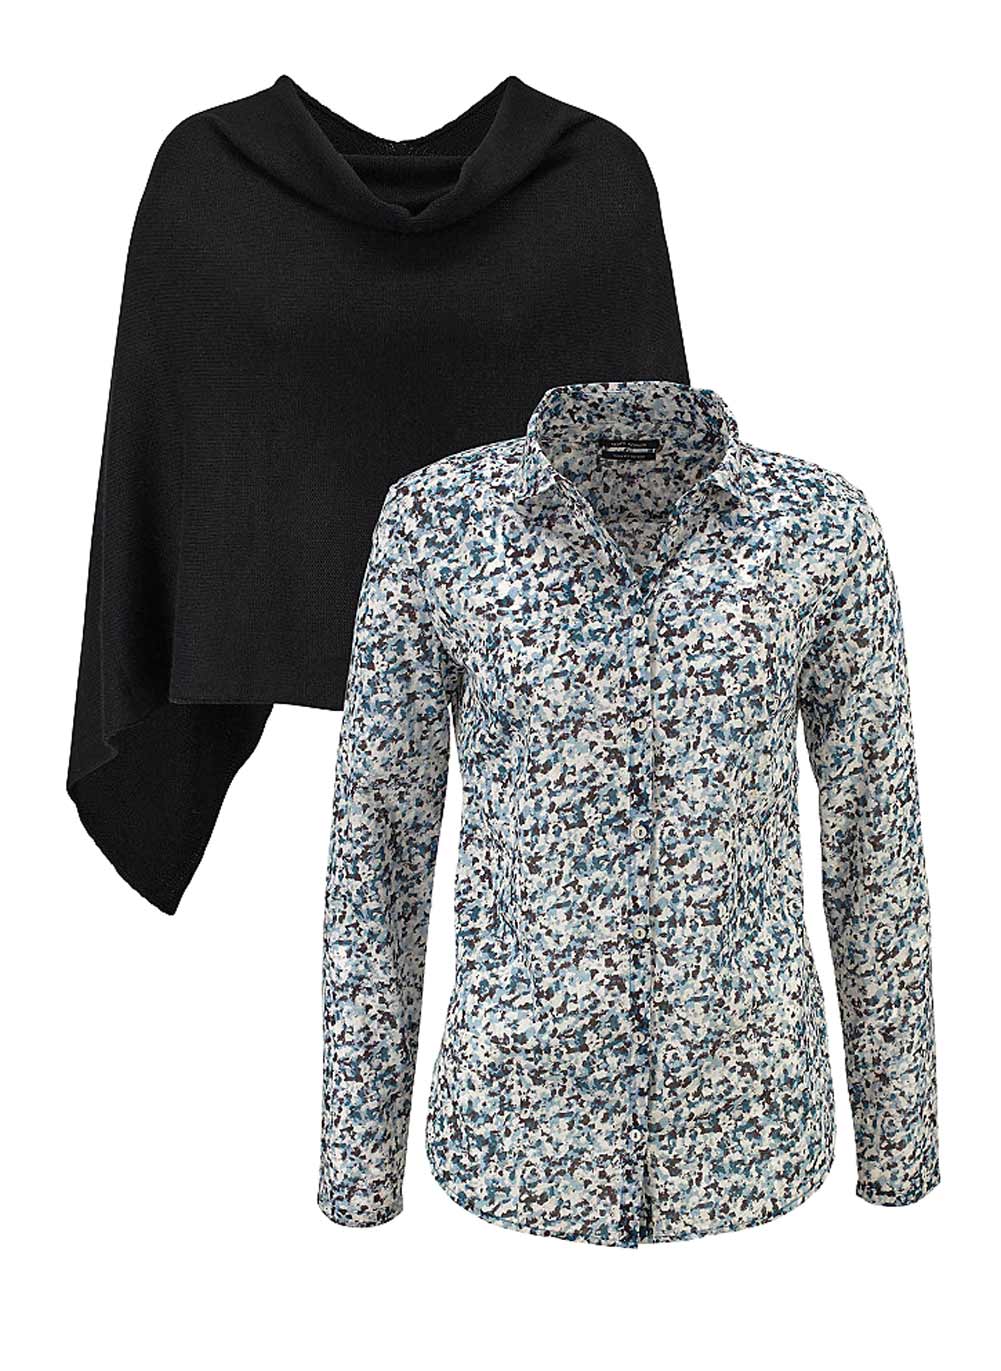 Marc O´polo Damen Marken-Bluse + Poncho, schwarz-grau-blau